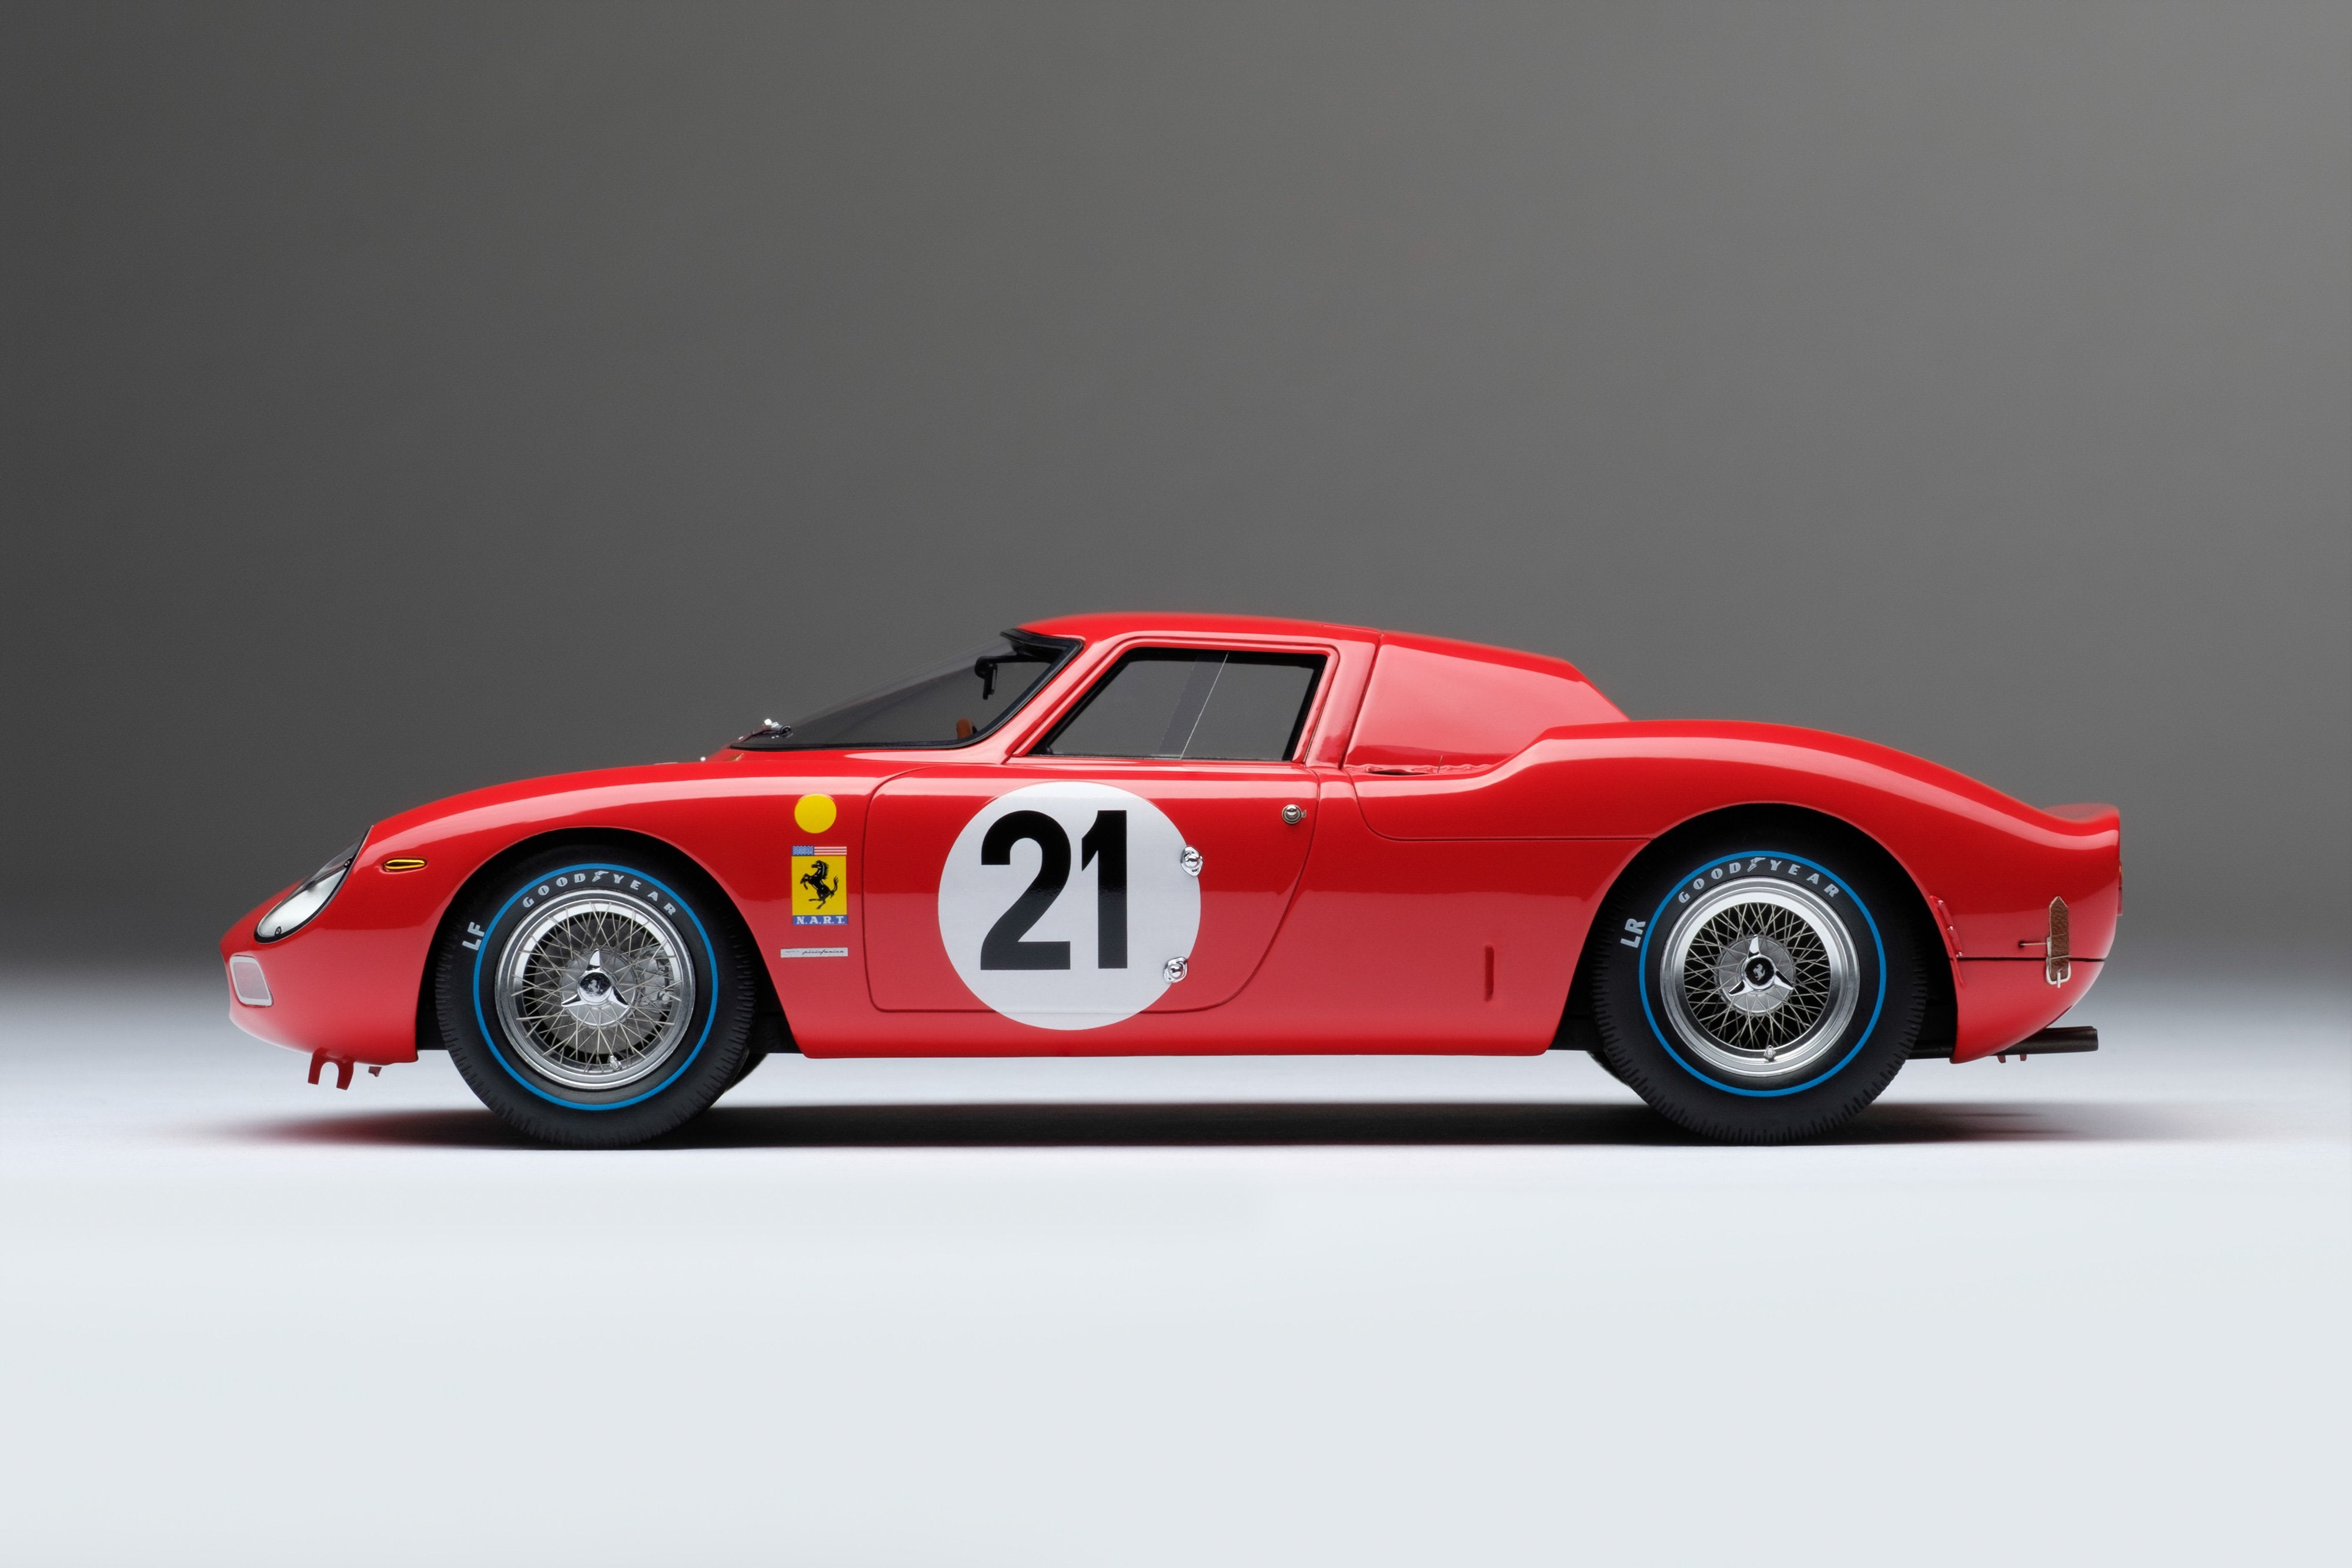 LE785 BURAGO 3033 Voiture 1/18 1:18 Ferrari 250 Le Mans 1965 Rouge